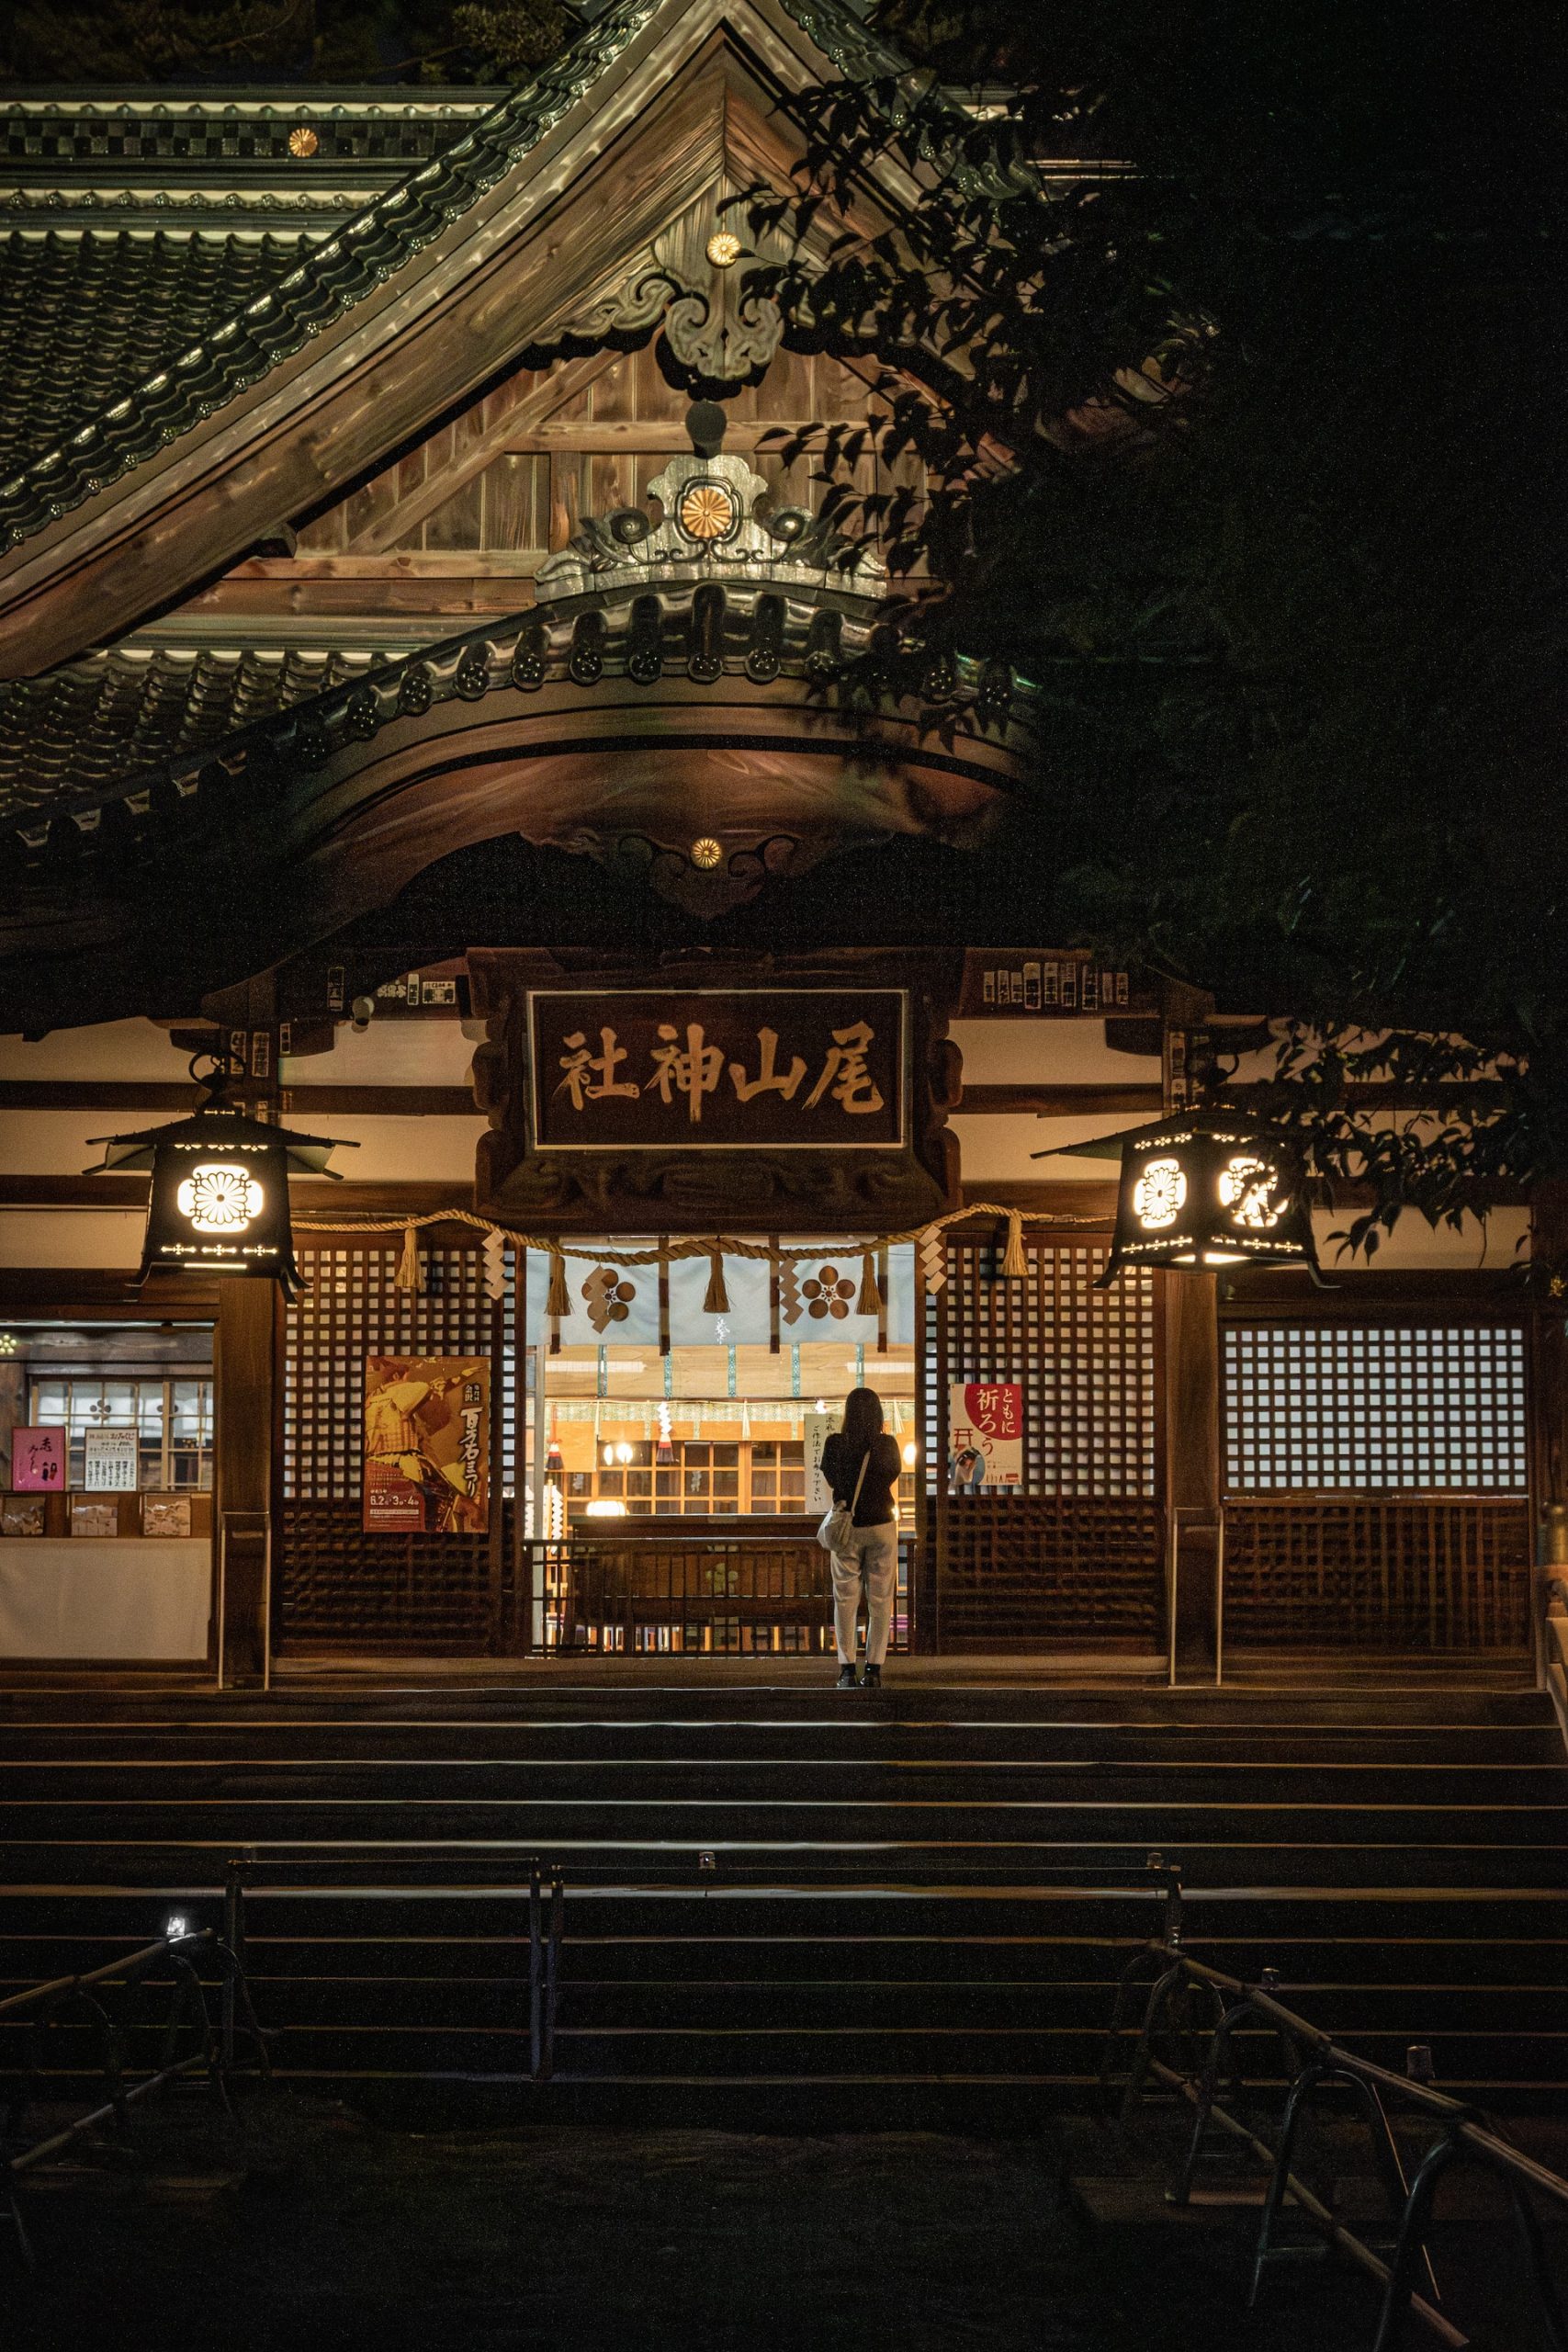 Kanazawa 2 Day Itinerary: The Best Ways to Explore the City in 2 Days